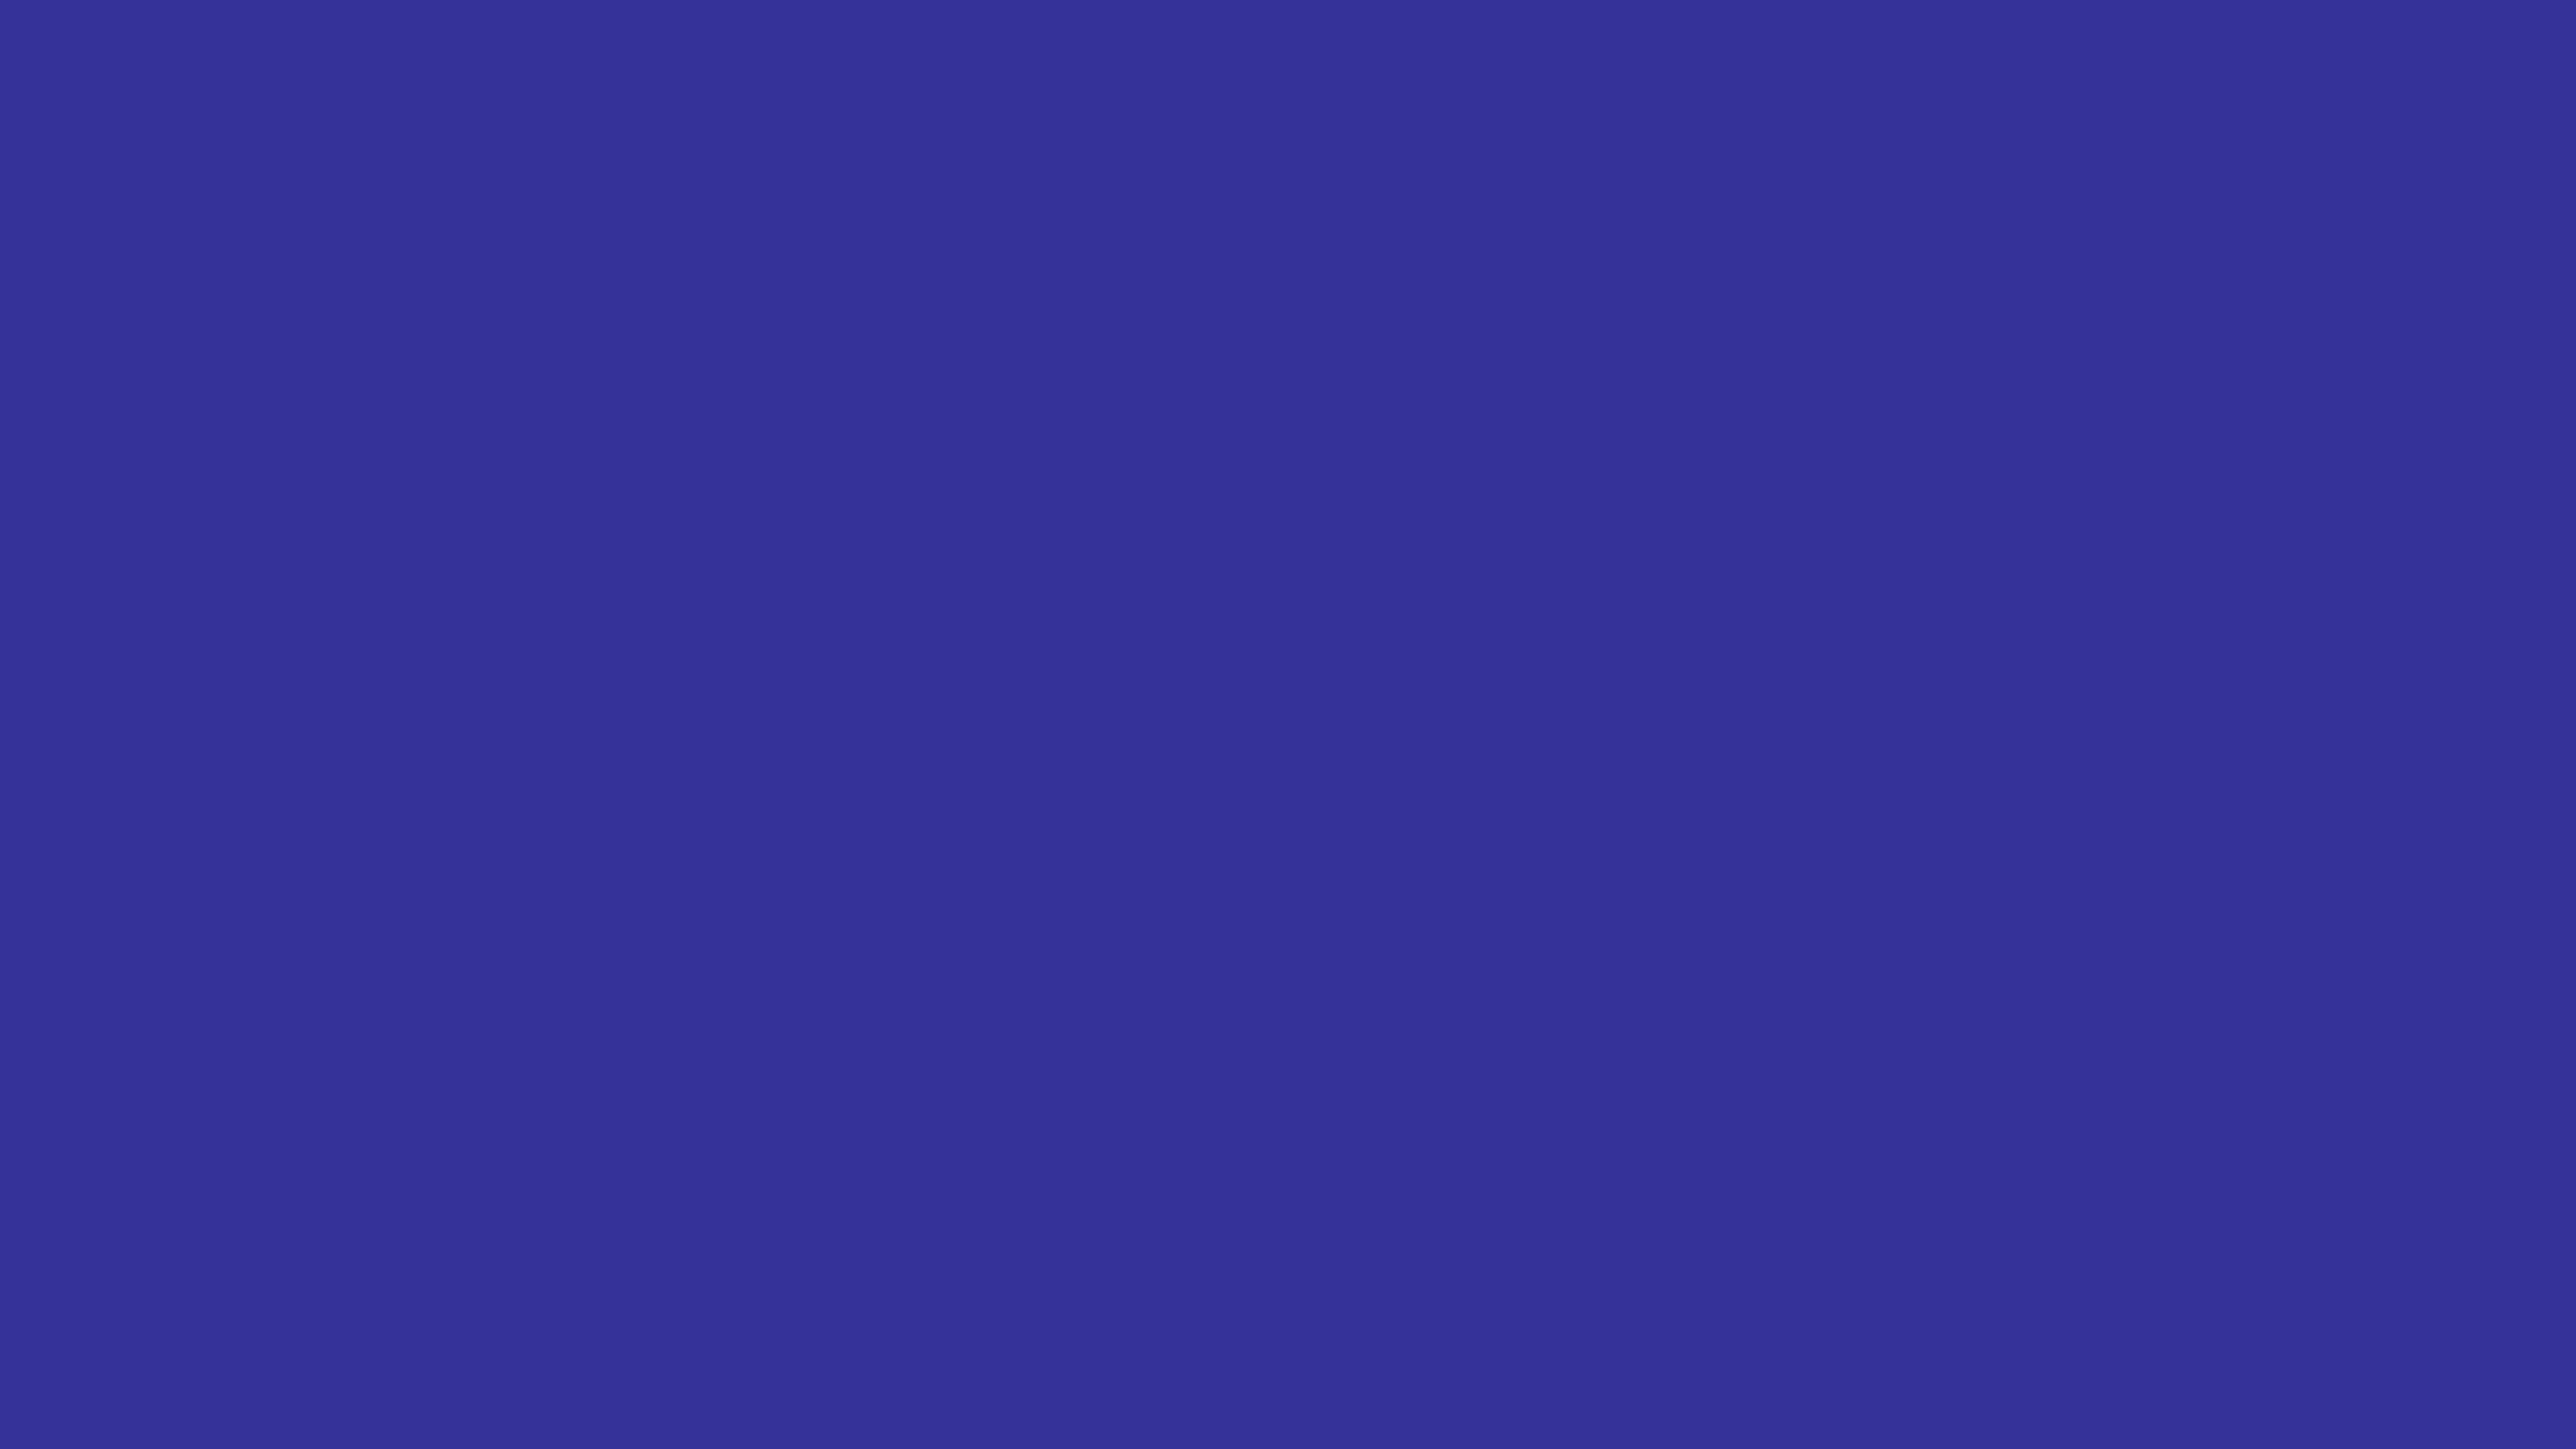 4096x2304 Blue Pigment Solid Color Background